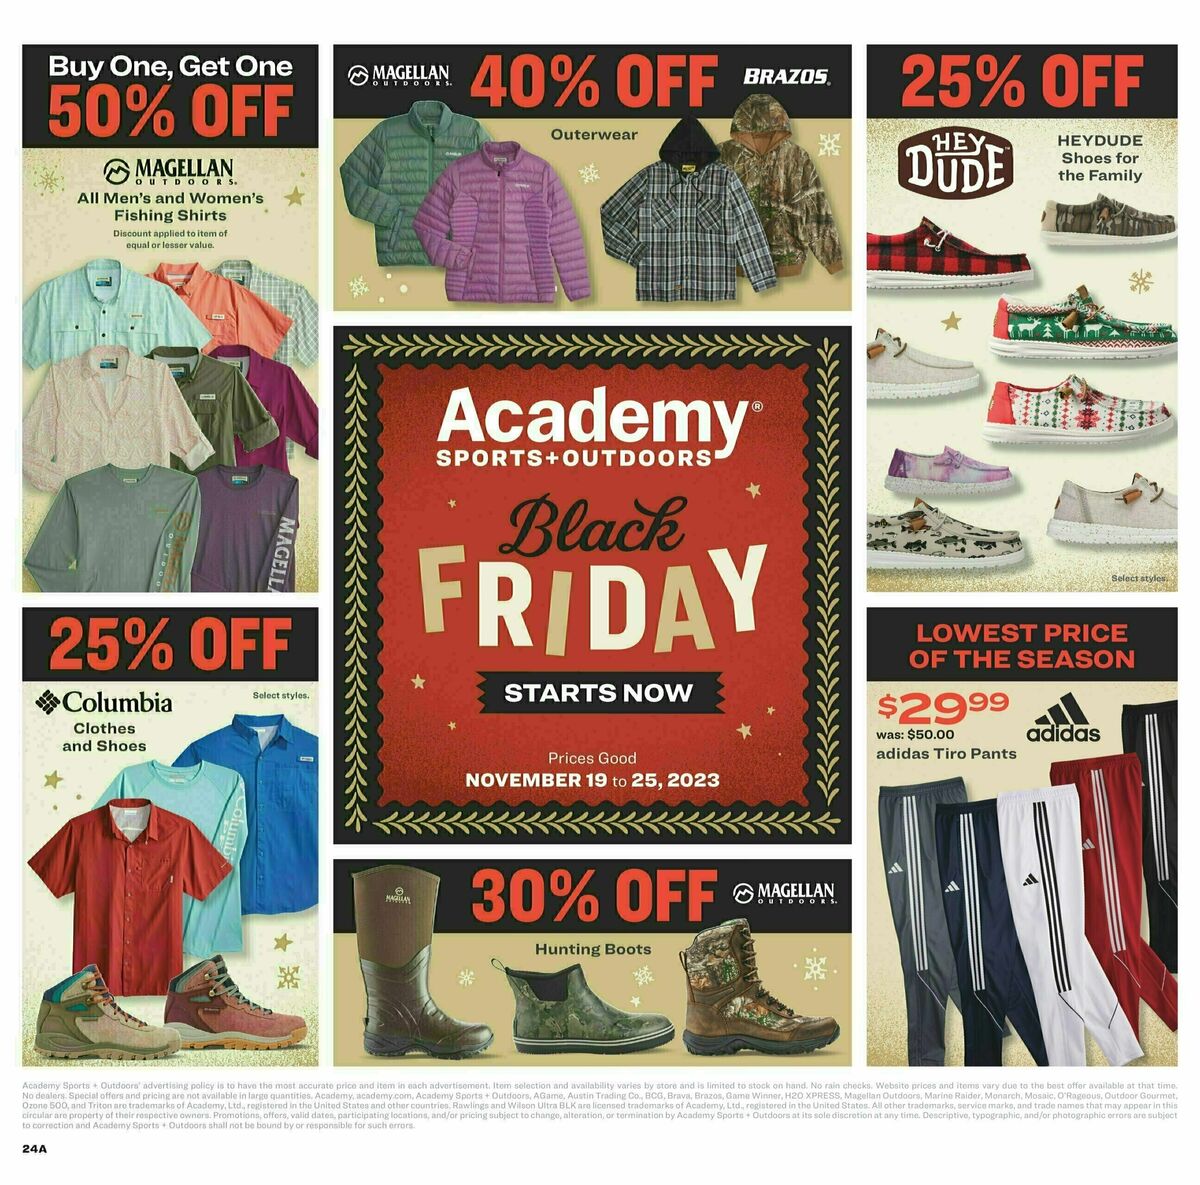 Academy Sports + Outdoors Weeklong Black Friday Weekly Ad from November 20